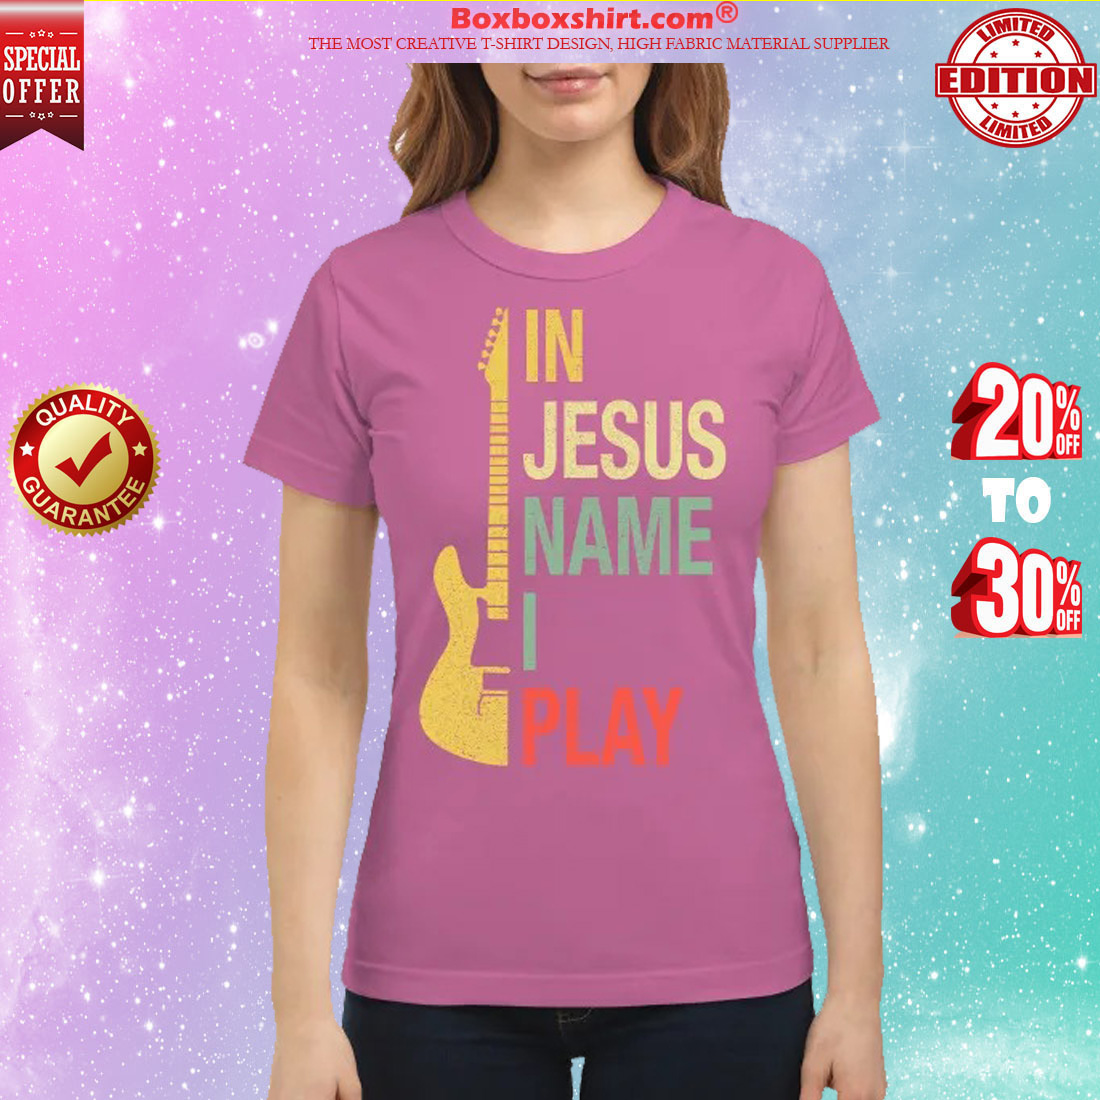 In Jesus name I play guitar classic shirt